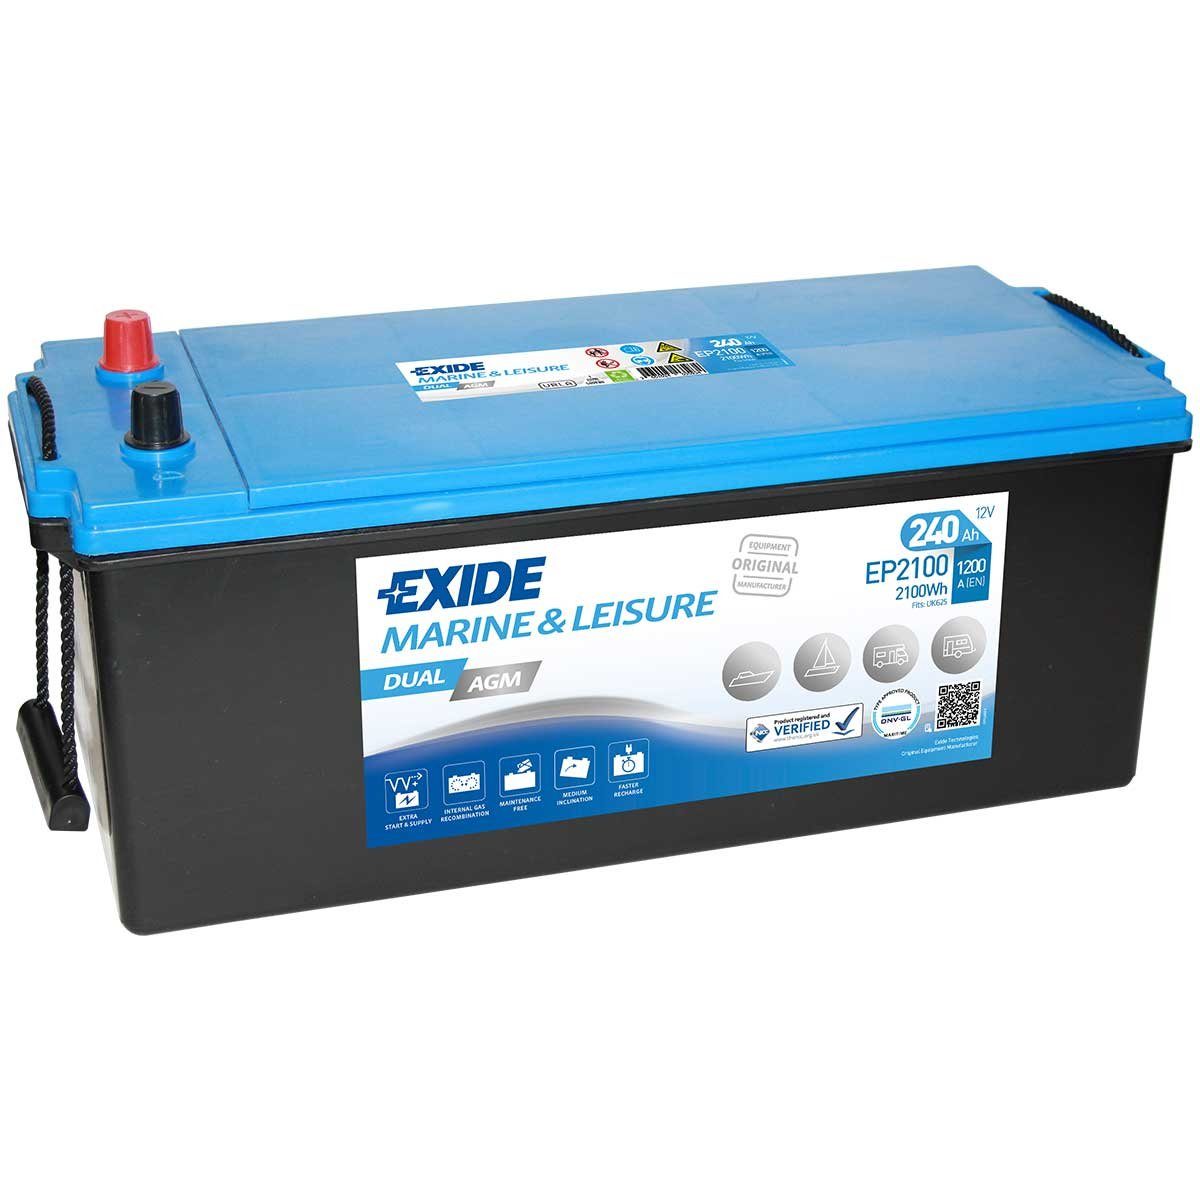 Exide Exide EP2100 DUAL AGM 12V 240Ah Marine & Leisure Batterie Batterie, (12 V)